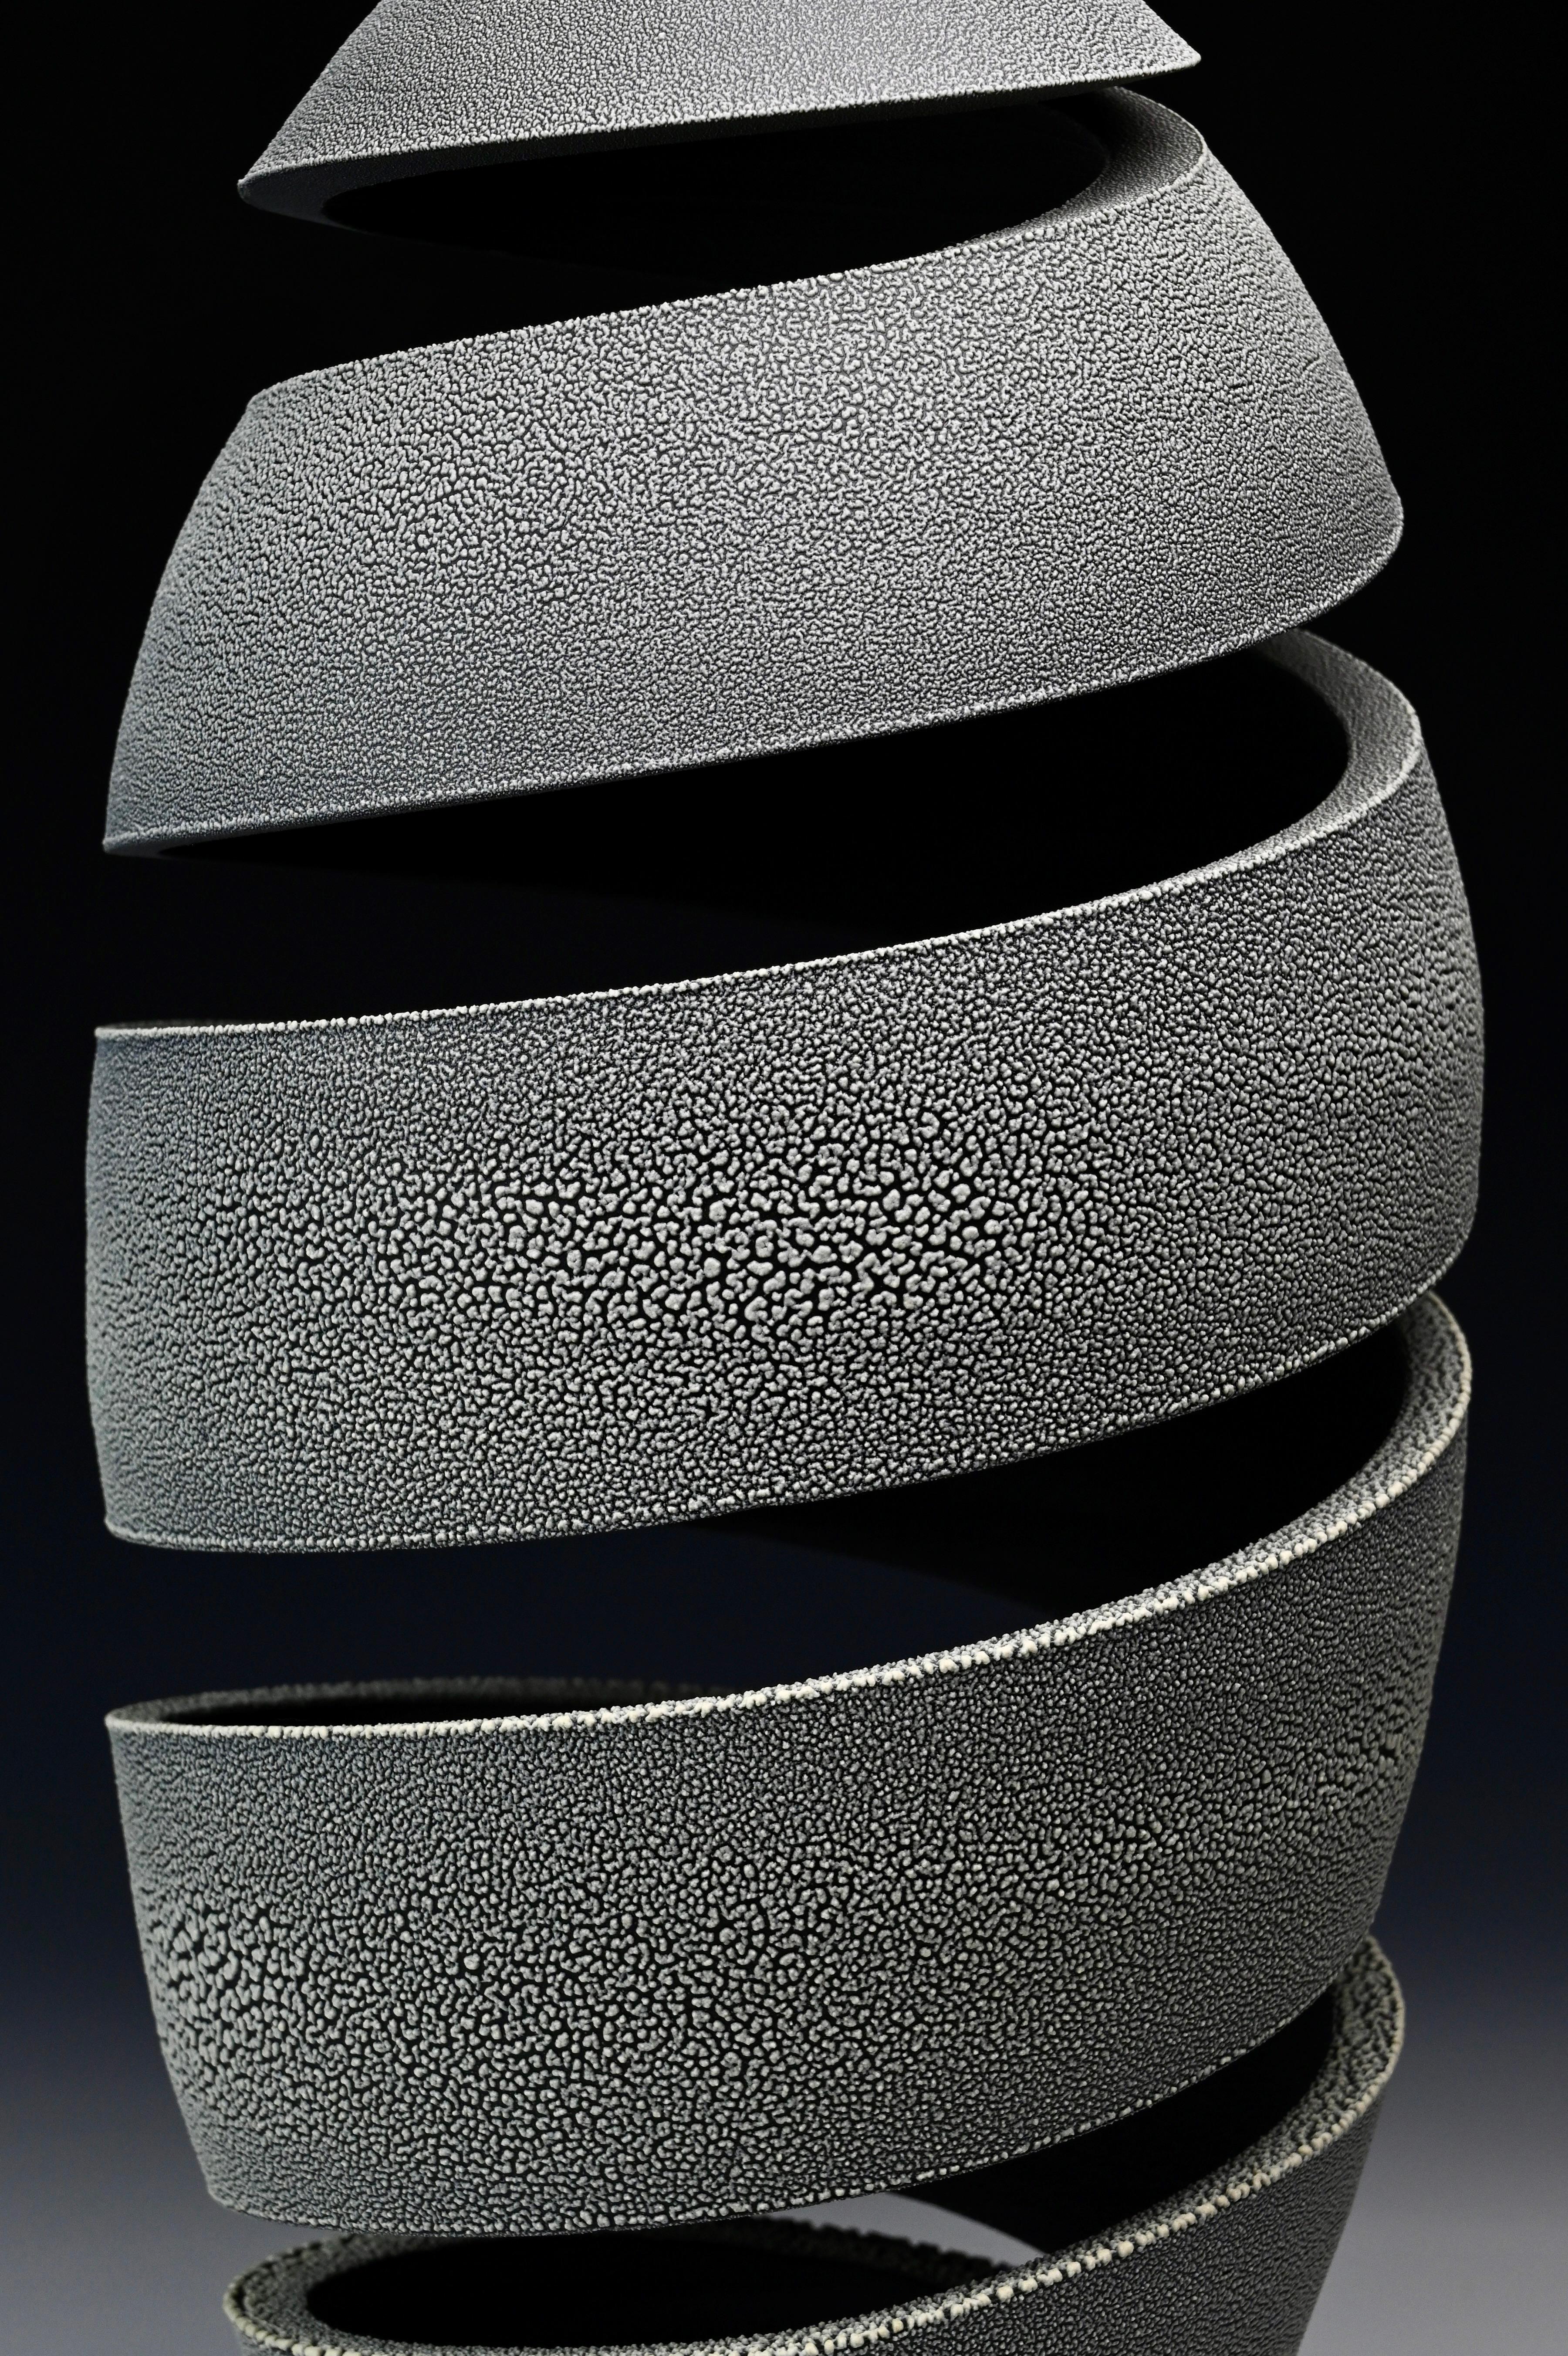 Spatial Spiral: Crawl - Abstract spiral ceramic sculpture - Sculpture by Michael Boroniec